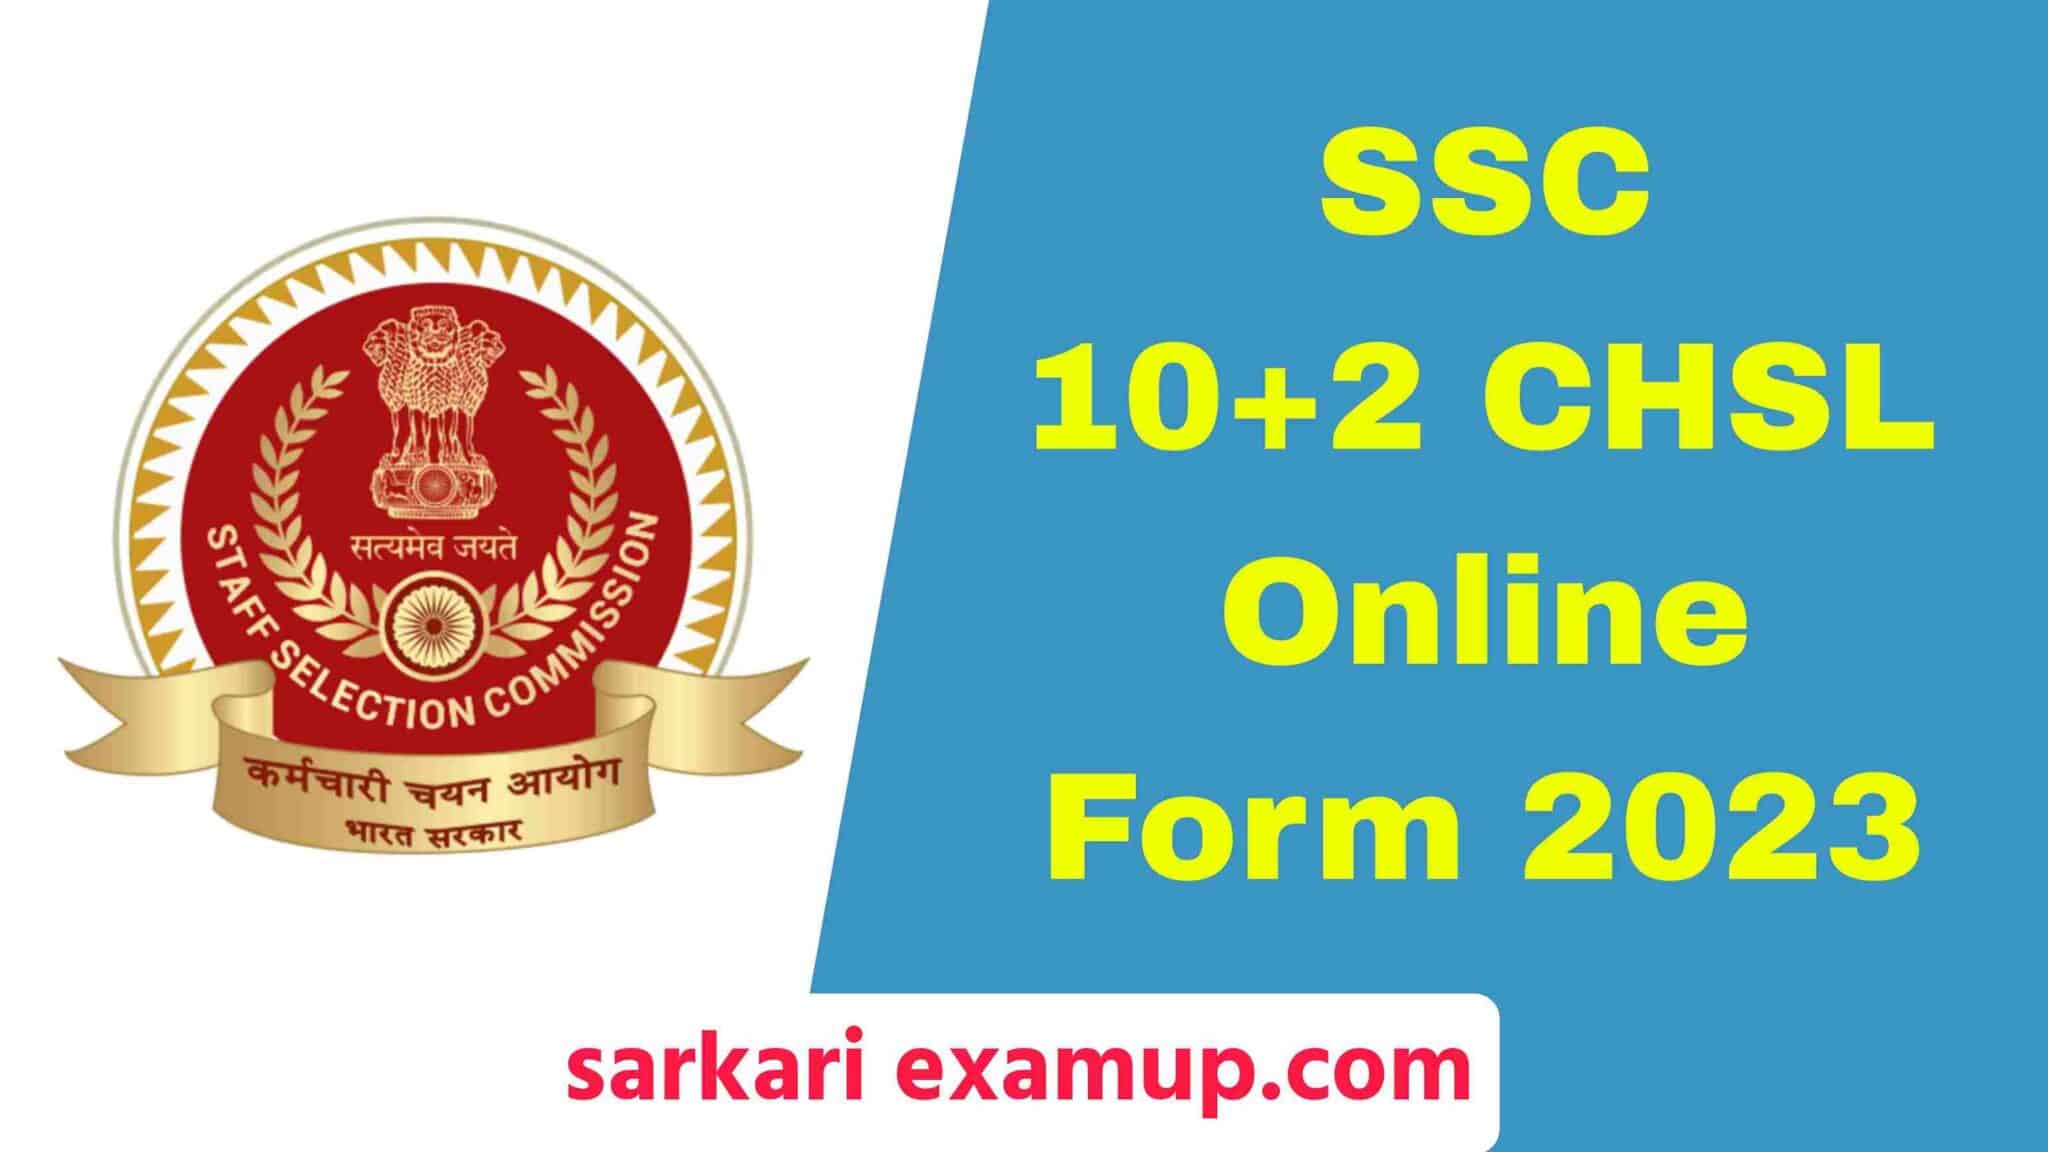 SSC 10+2 CHSL Online Form 2023 एसएससी सीएचएसएल ऑनलाइन आवेदन जारी